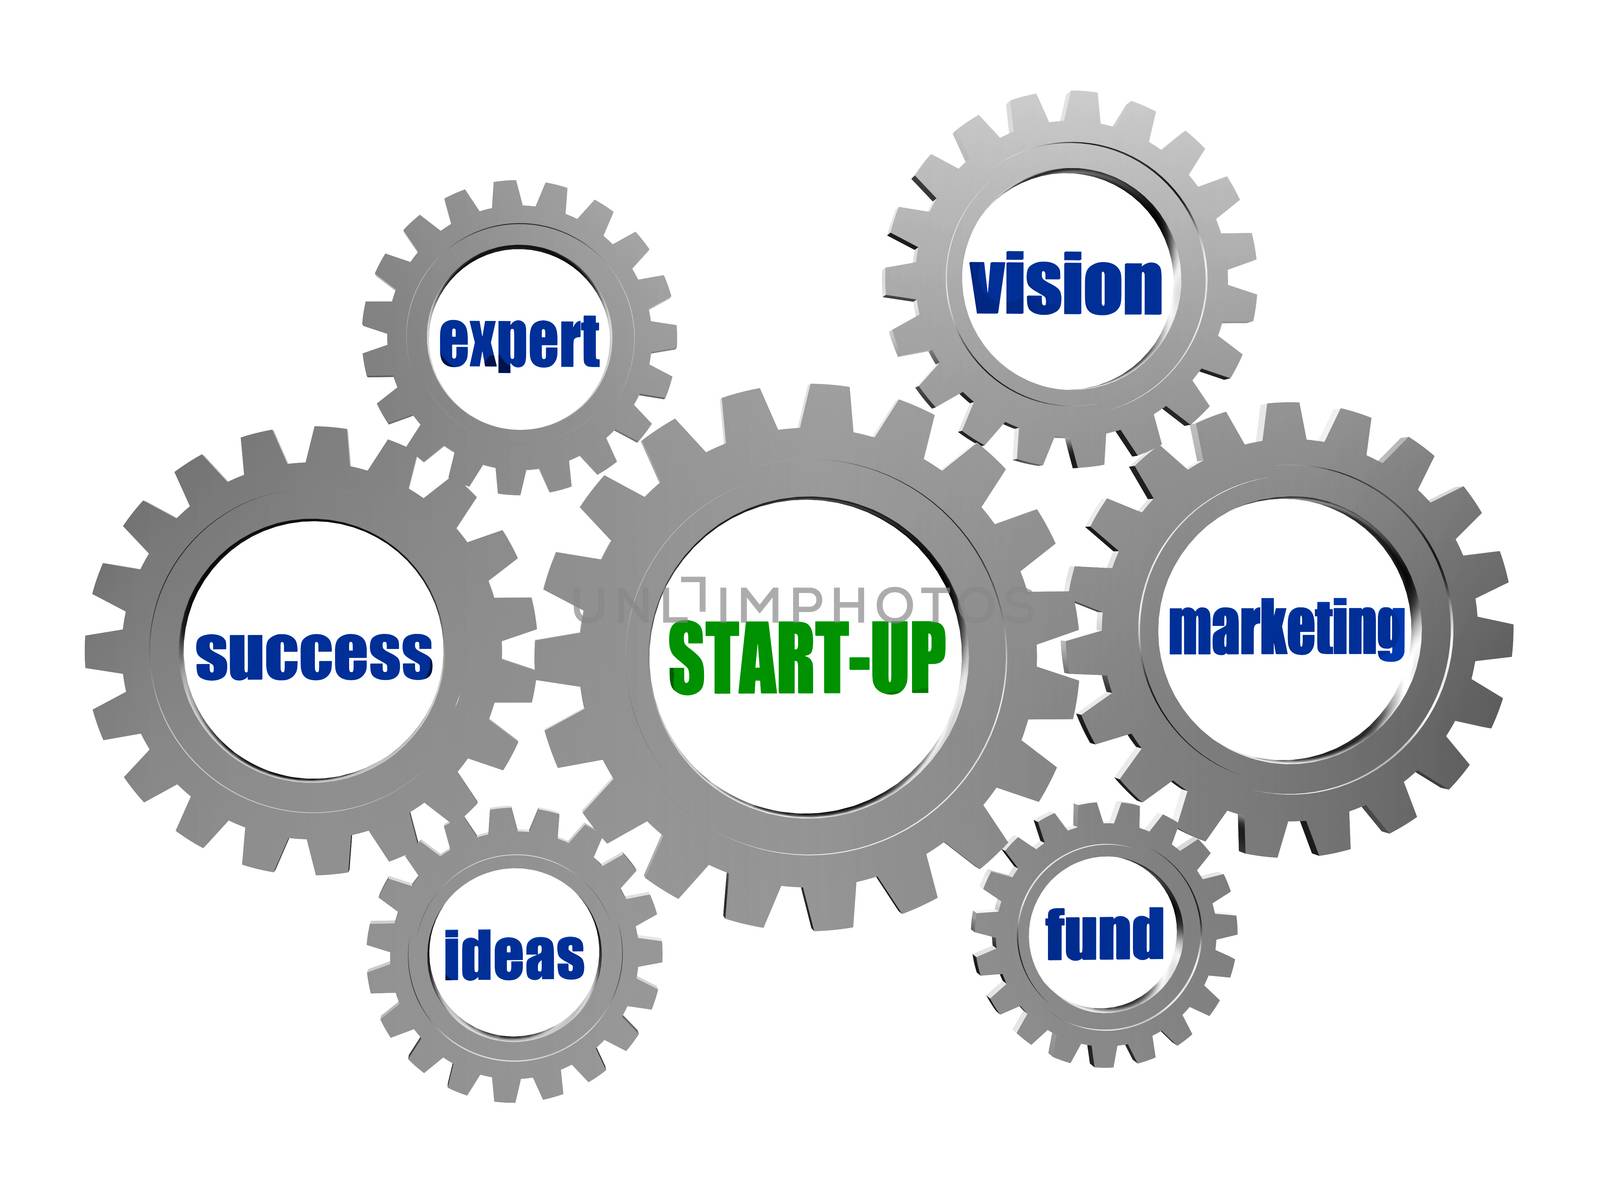 start up, success, ideas, expert, vision, marketing, fund - business development words in 3d silver grey metal gear wheels